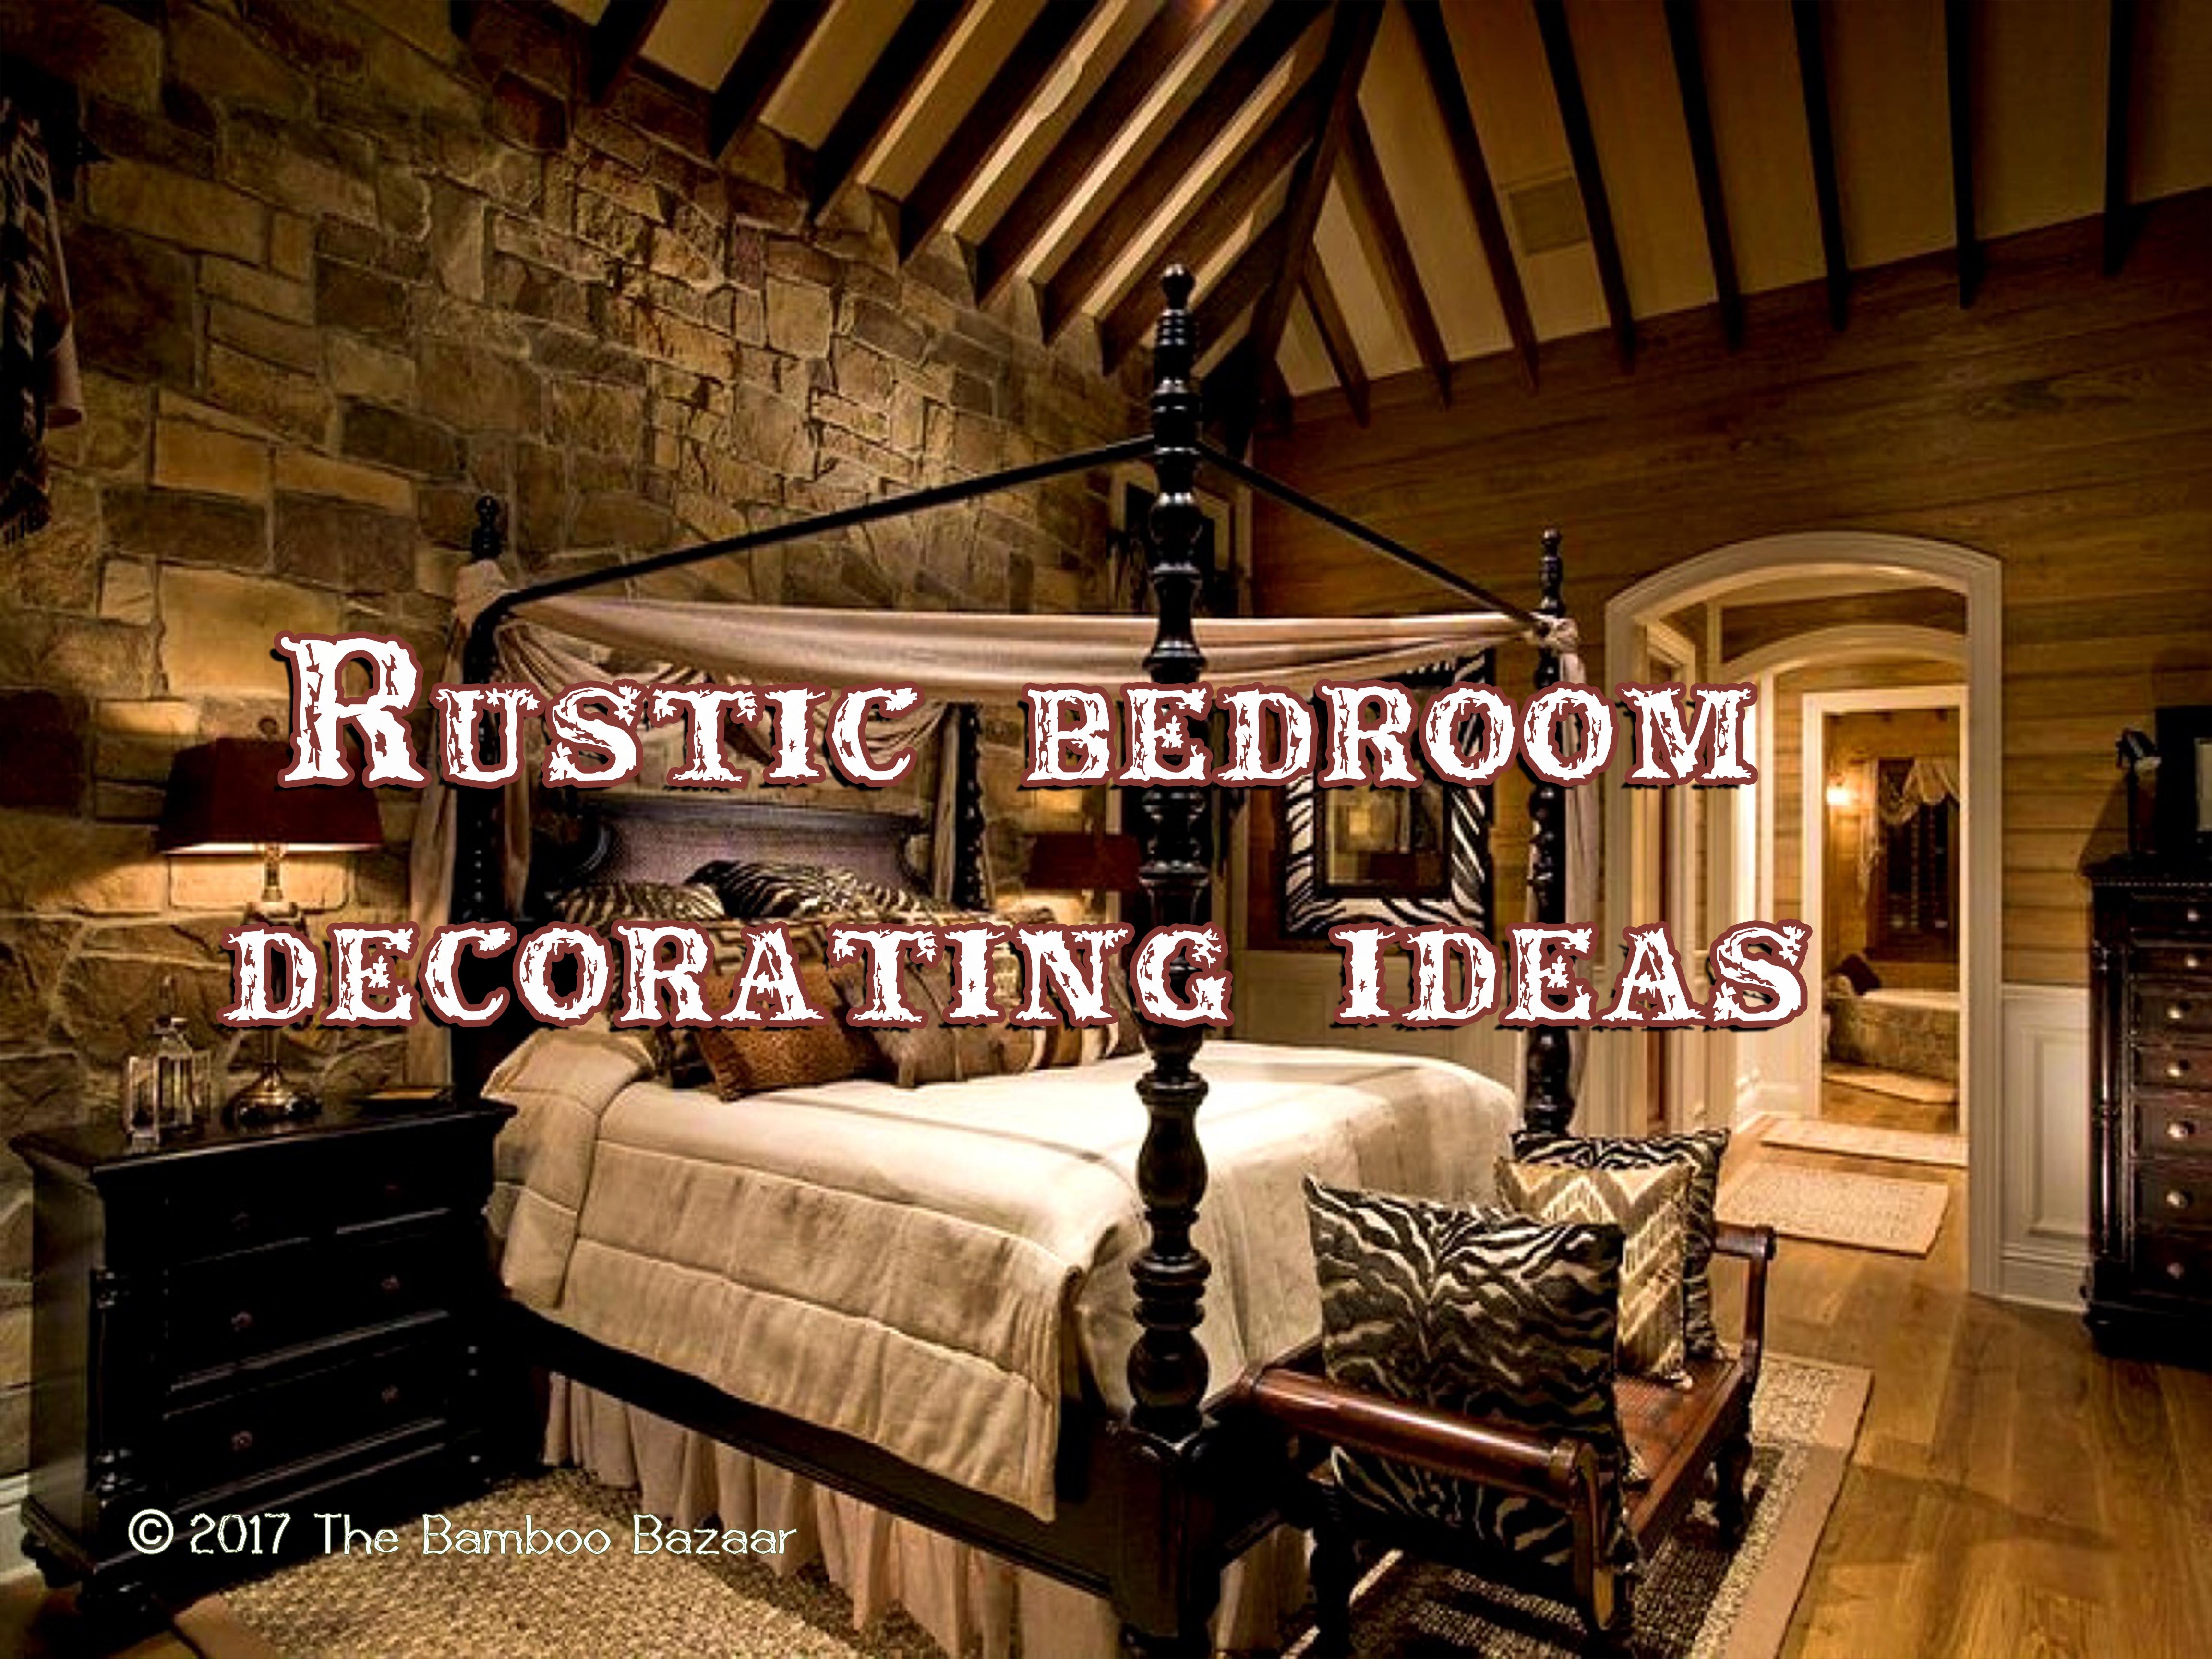 Rustic bedroom decorating ideas